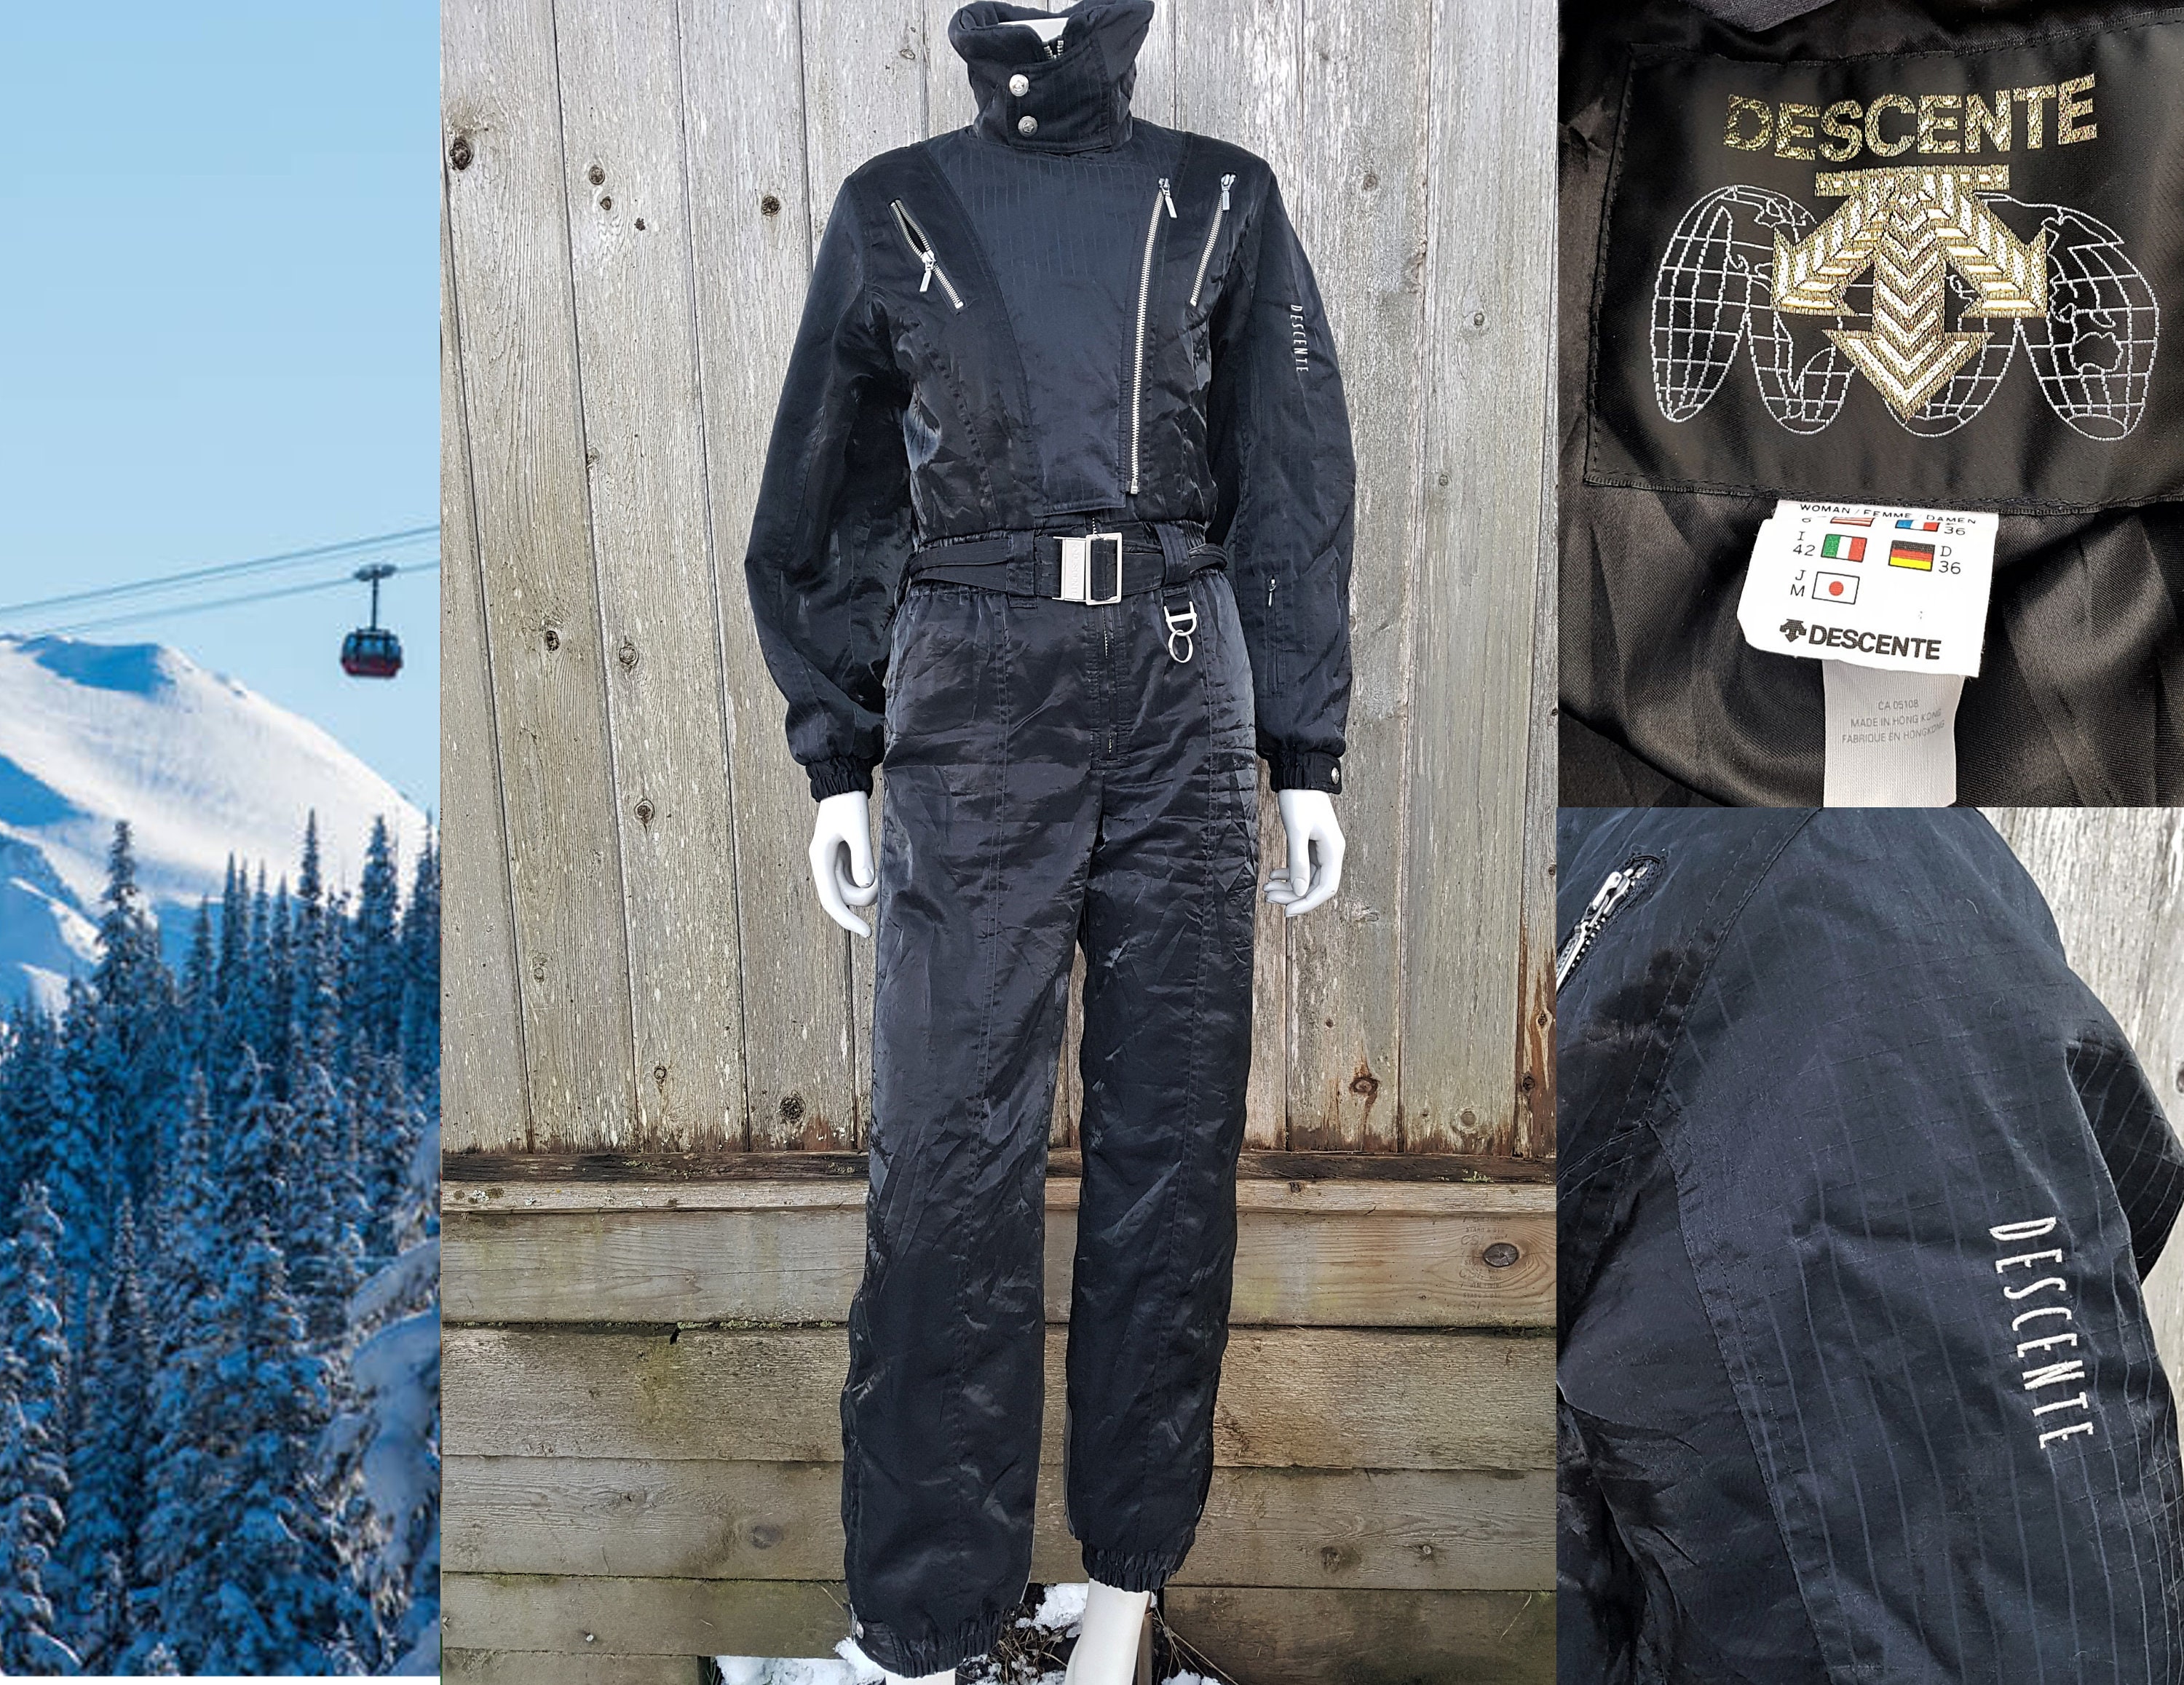 The North Face Hyvent Ski/snowboard Pants /snow Pants/women's XL